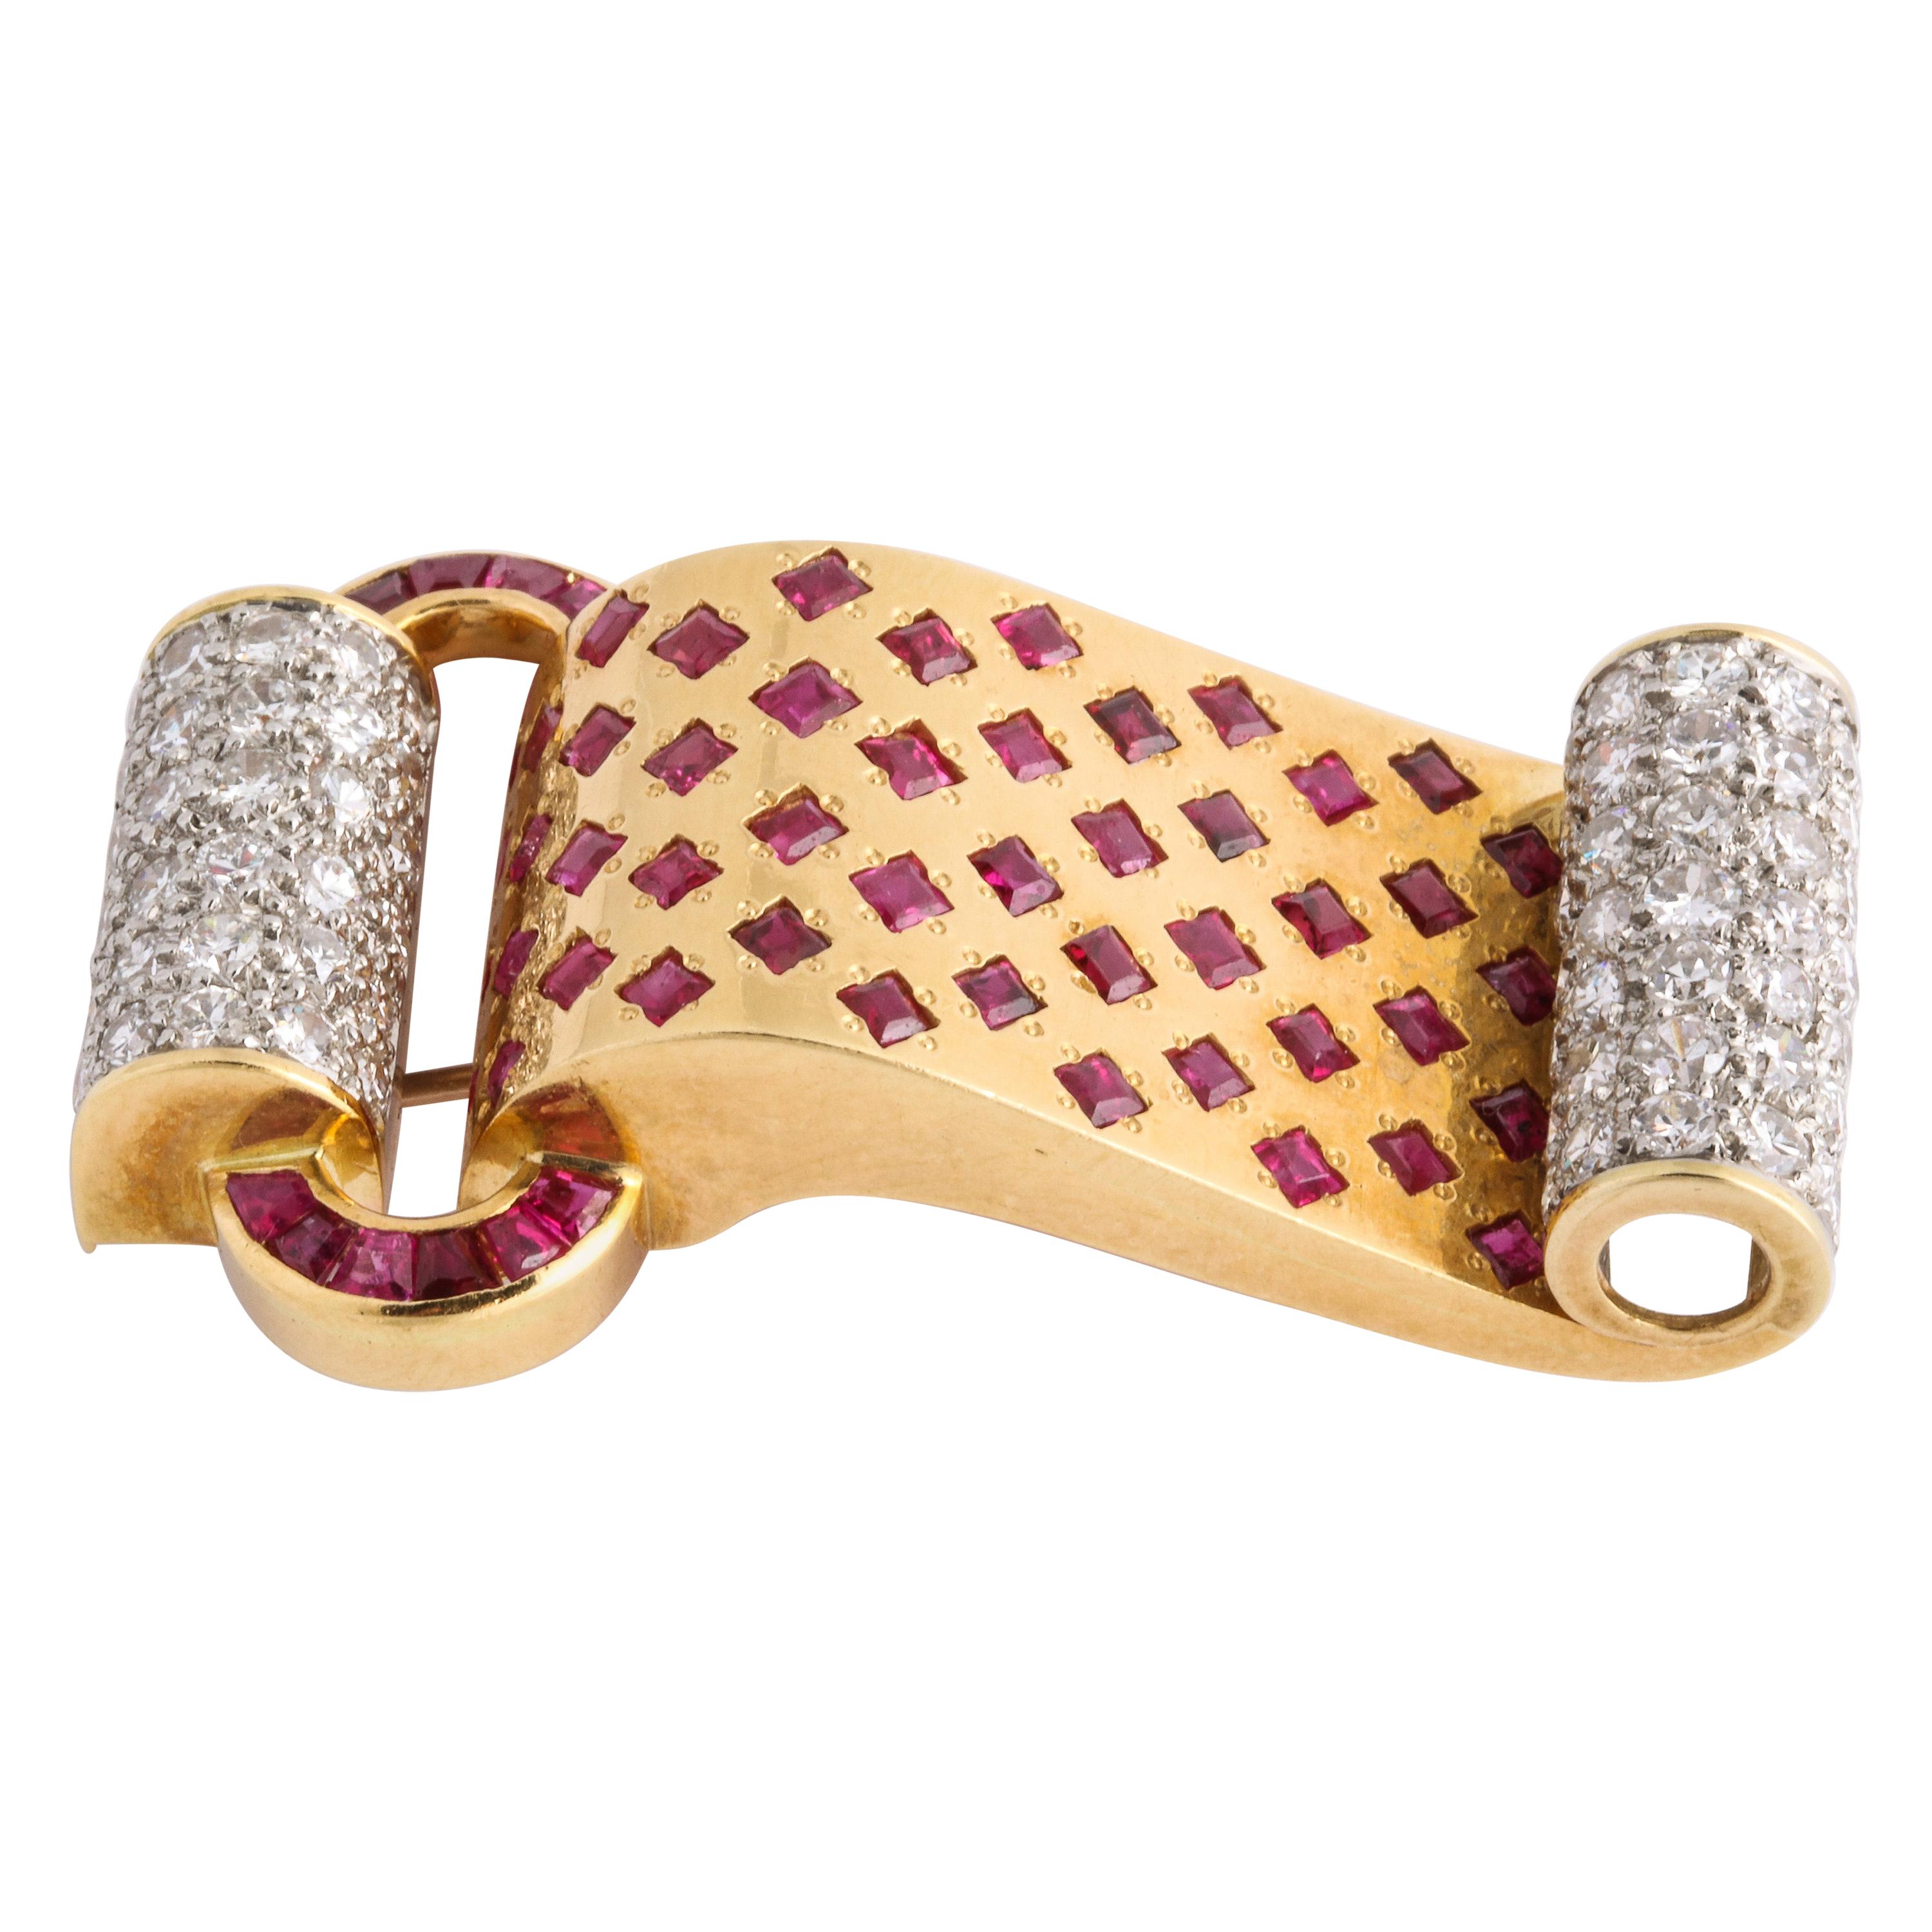 Retro Style 18 Karat Yellow Gold Ruby and Diamond Bracelet and Pendant Set